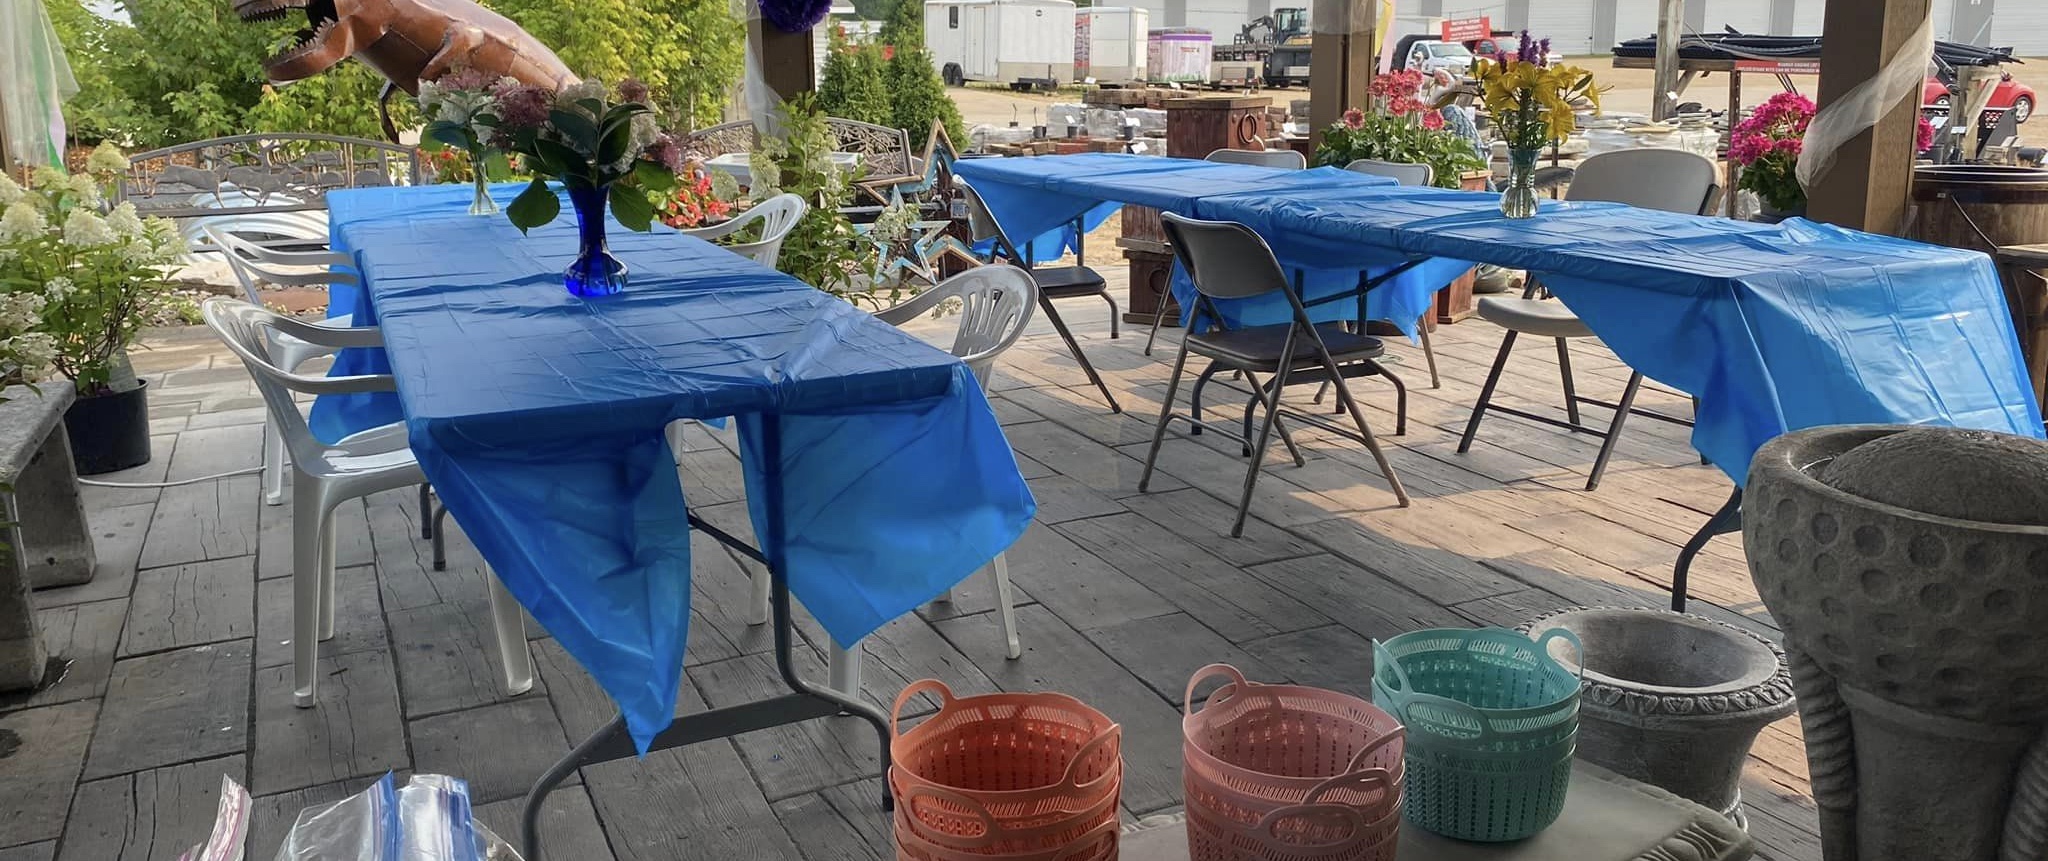 garden craft event setup at Shawano Lawn & Stone